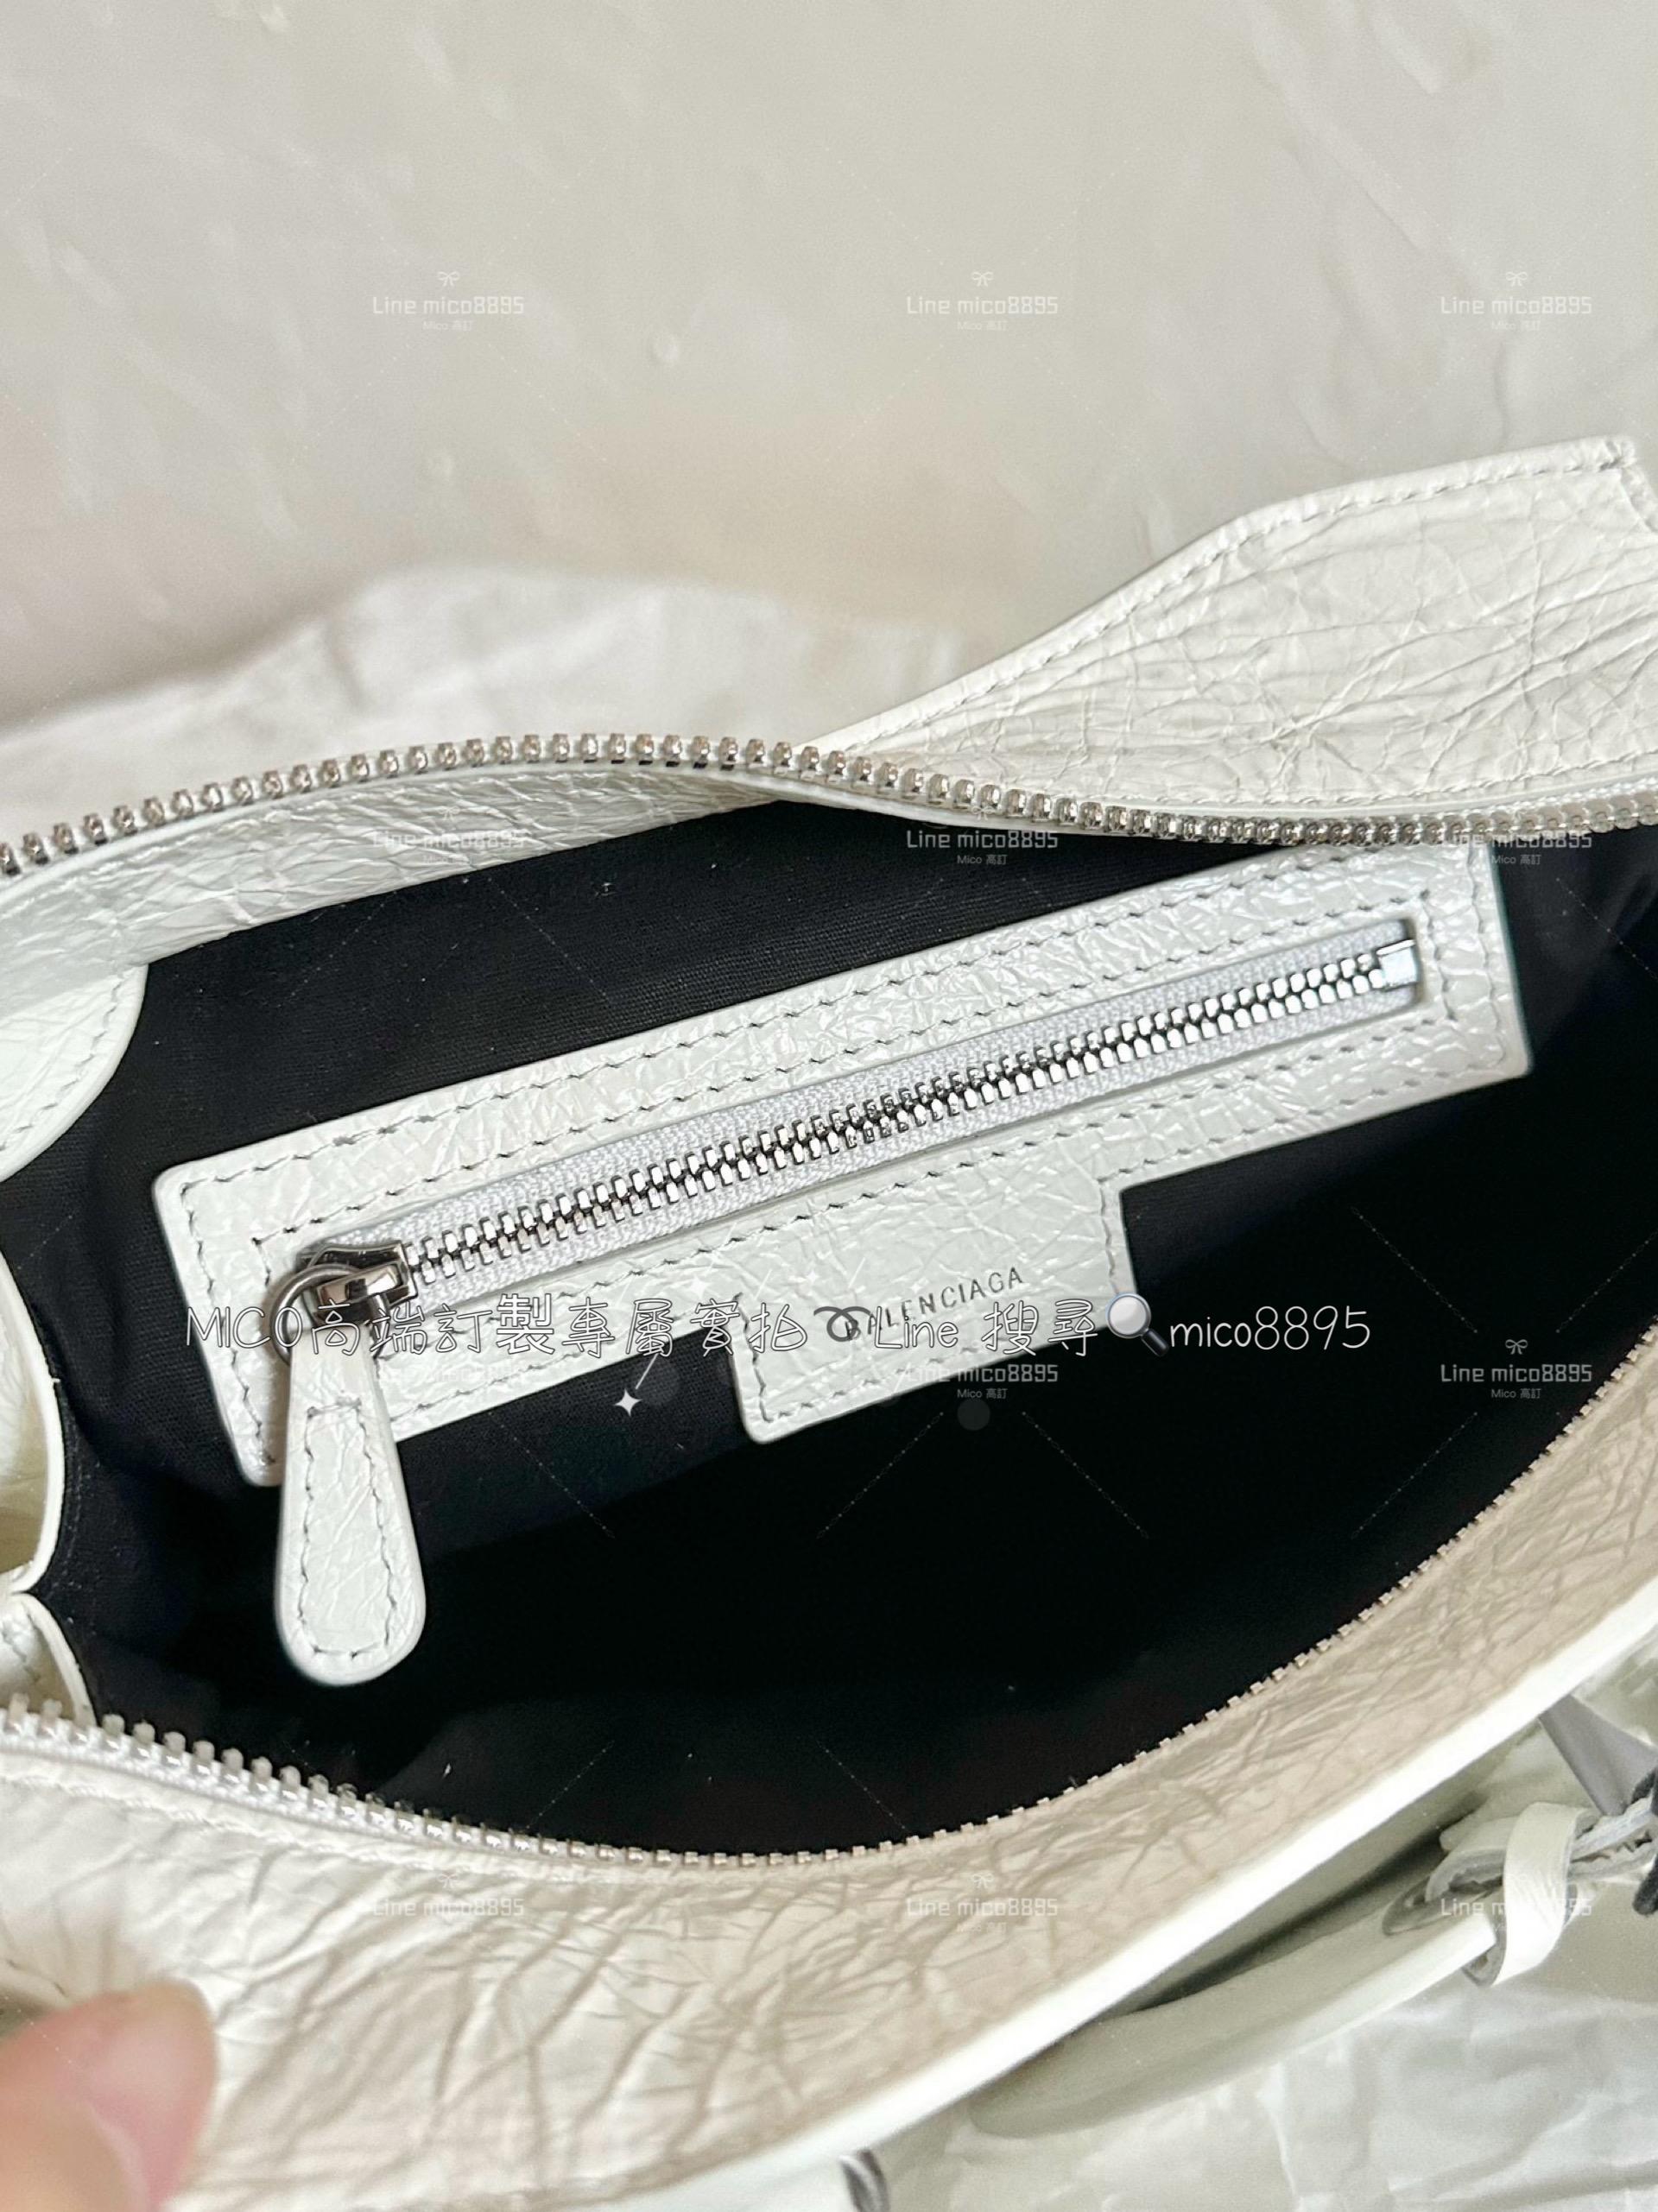 Balenciaga 白款/銀釦 Neo classic 機車包xs 26cm